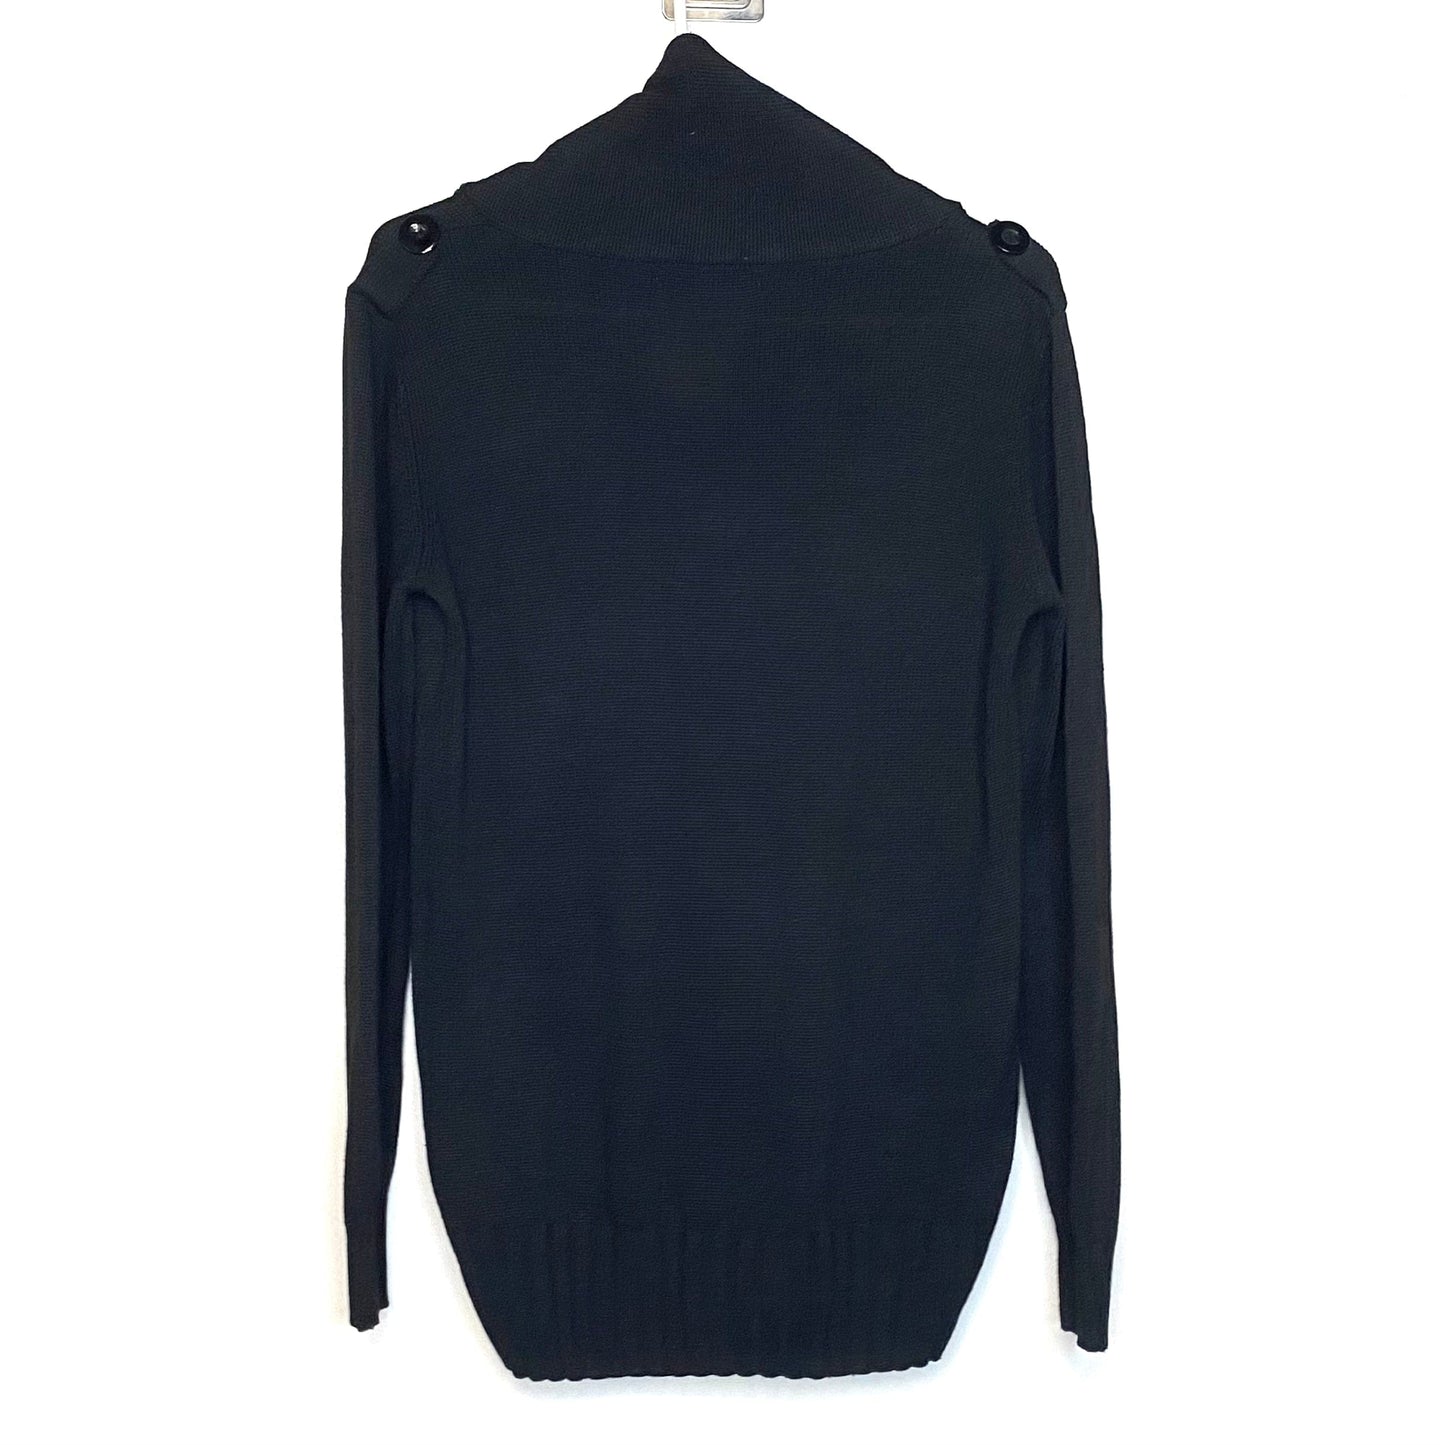 W[DAblju:] Size M Navy Blue Cardigan Sweater Button-Up